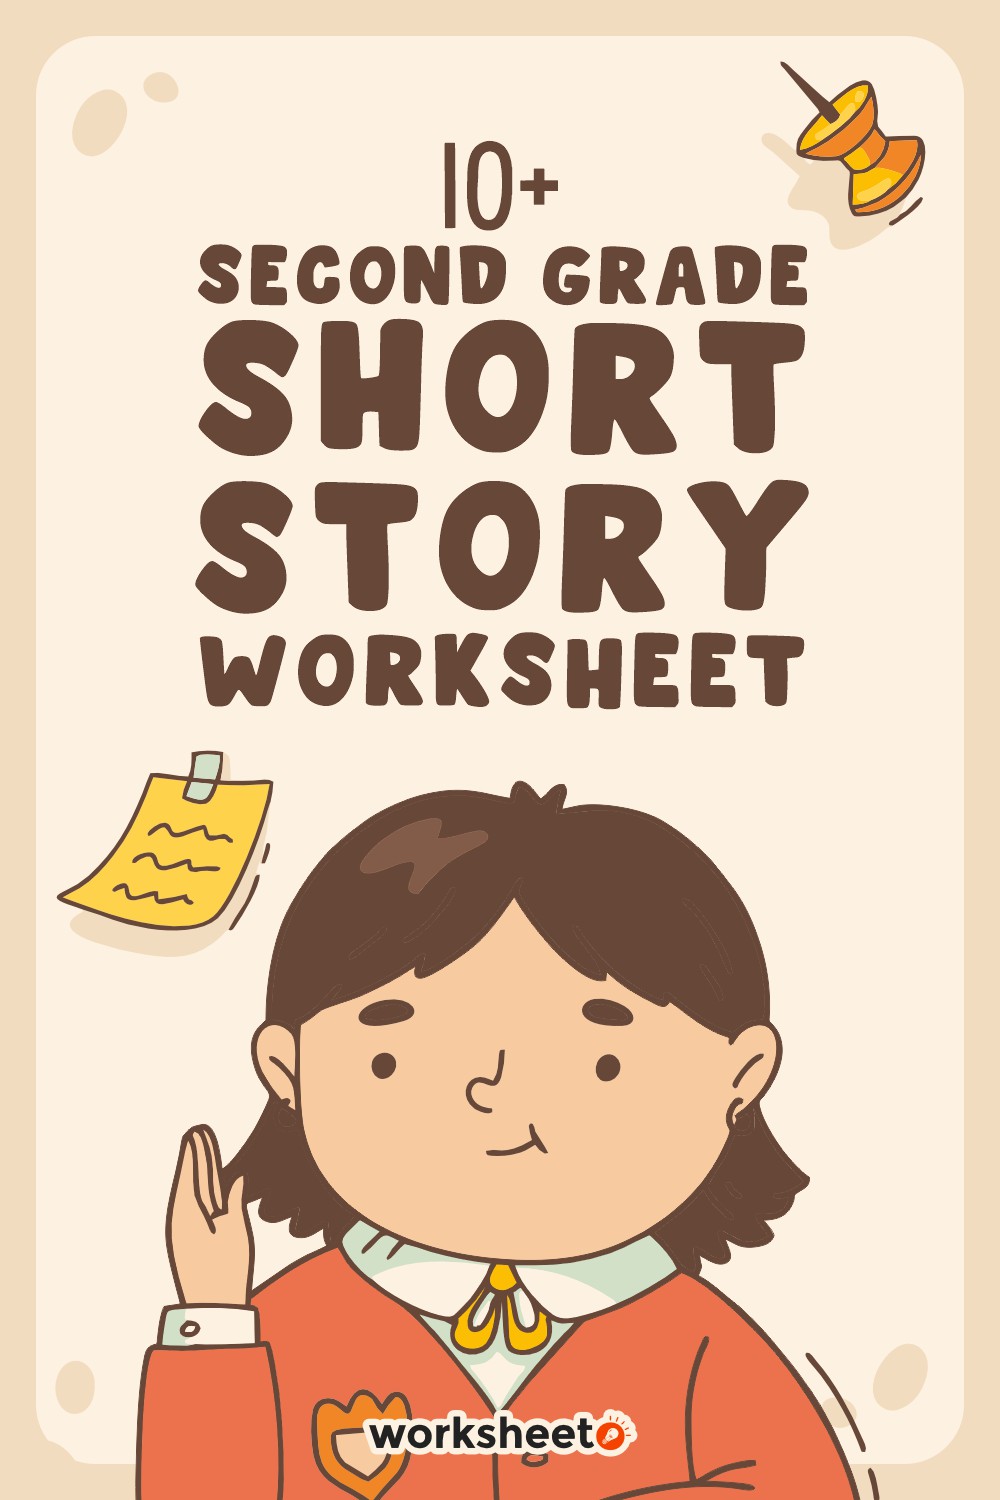 17 Images of Second Grade Short Story Worksheet